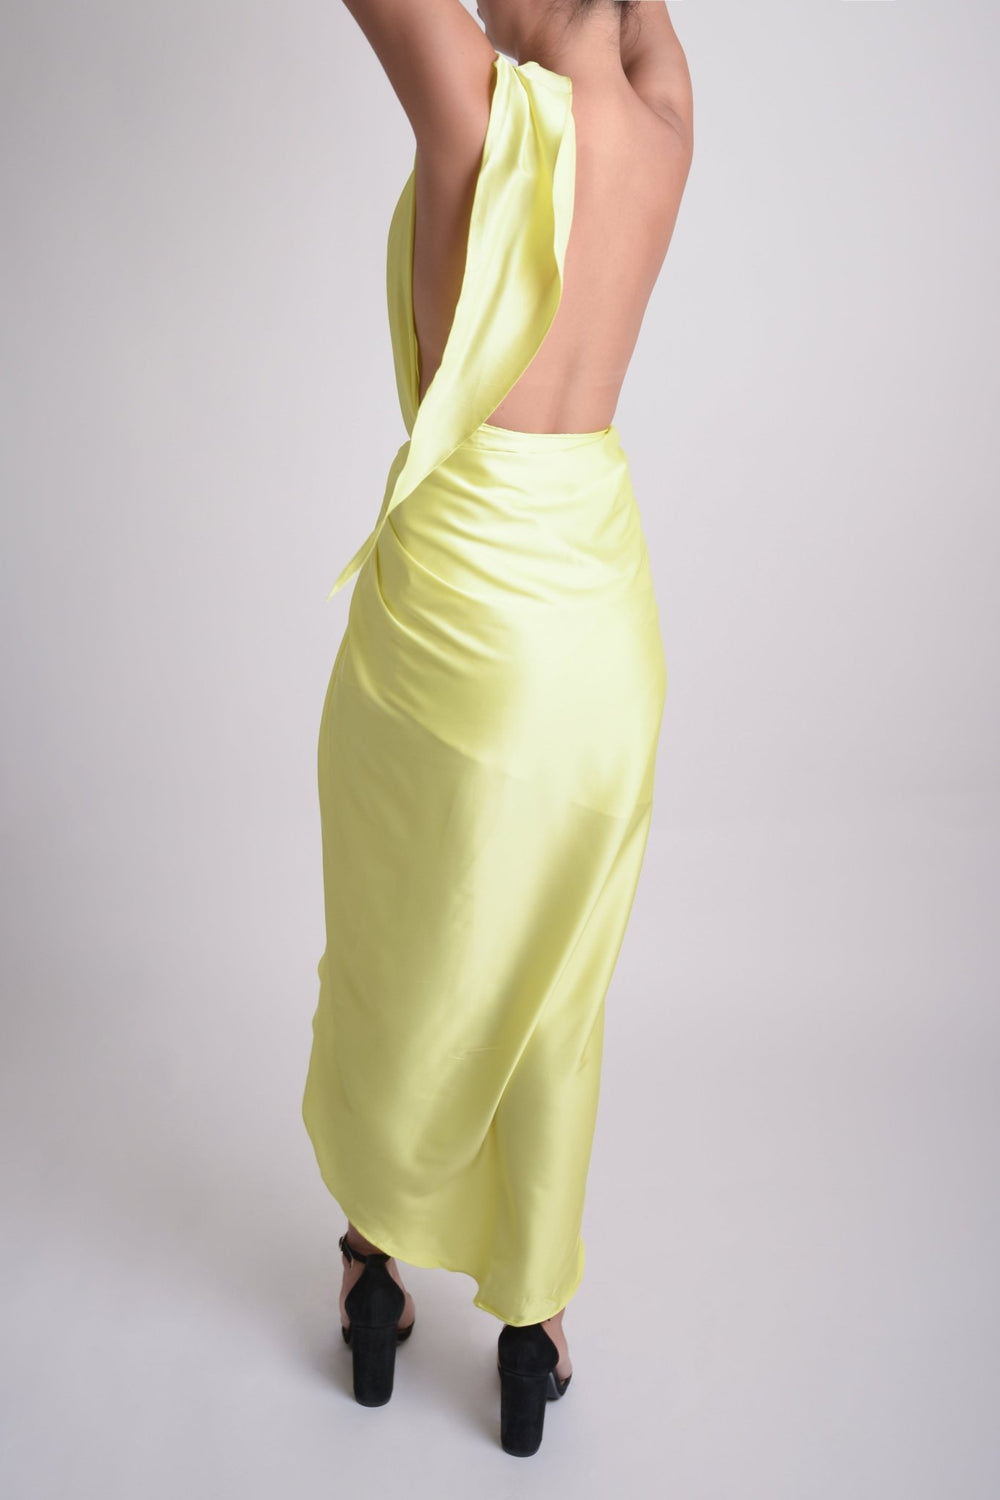 Celine - verde/amarillo limón - Lend the Trend renta de vestidos mexico